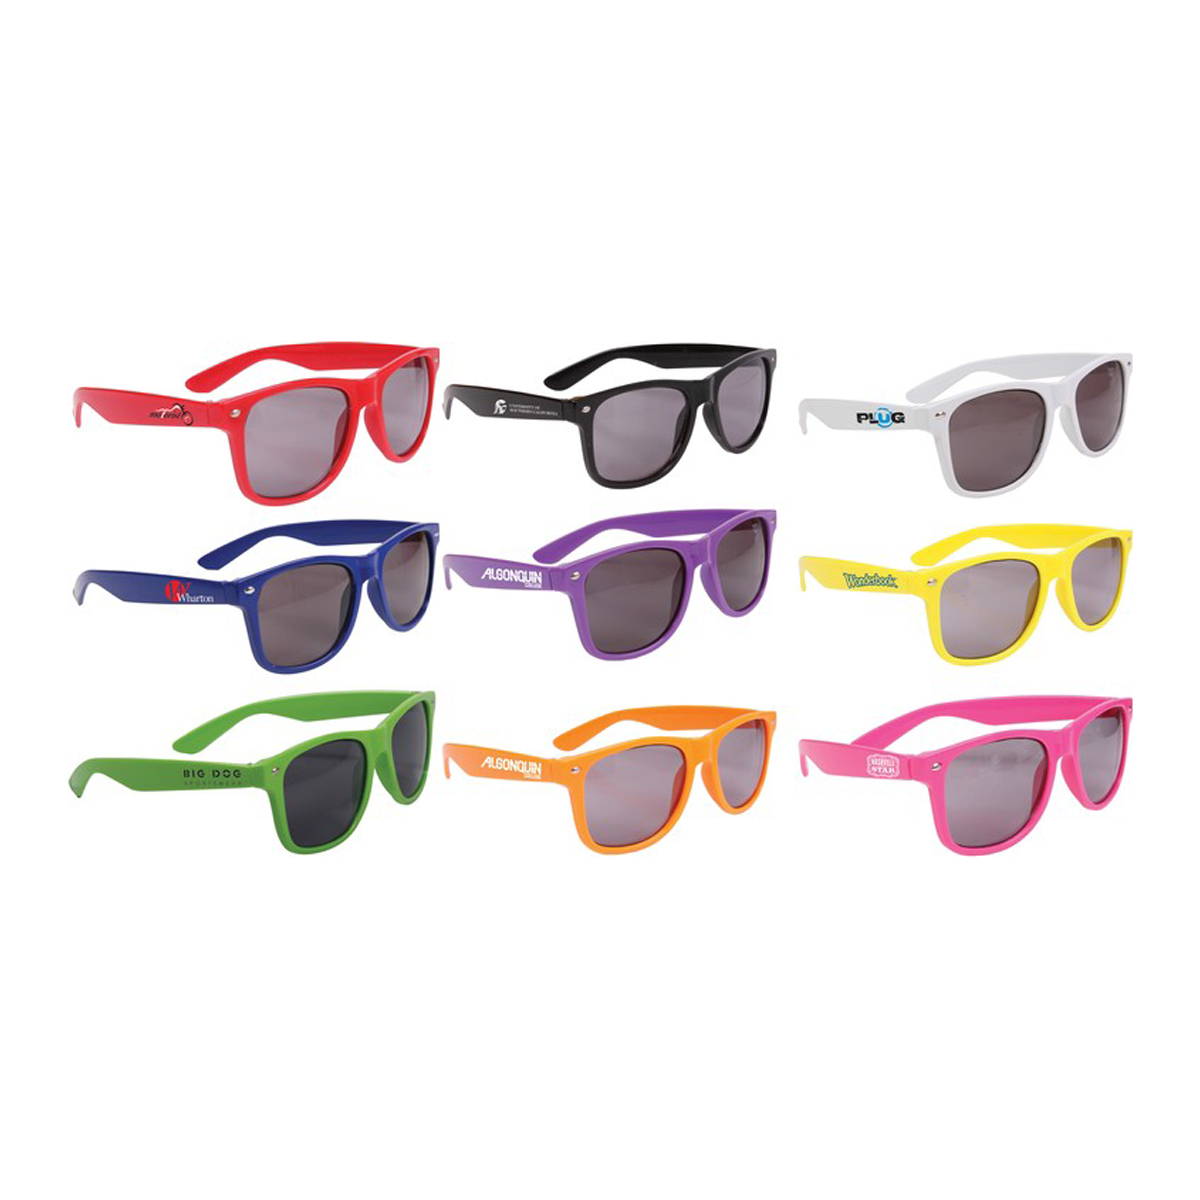 Single color Gloss Sunglasses